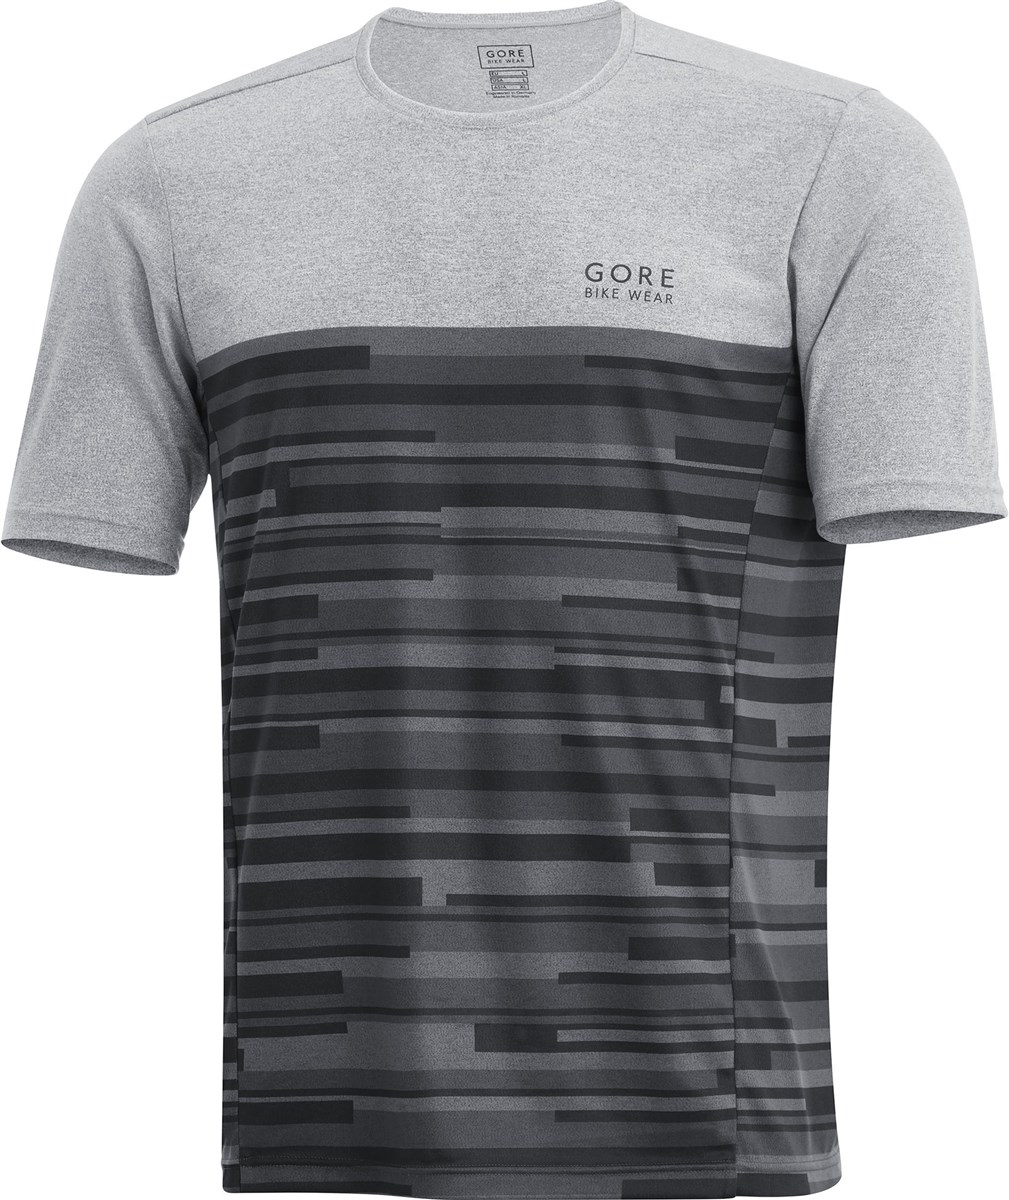 Gore Element Stripes Shirt SS17